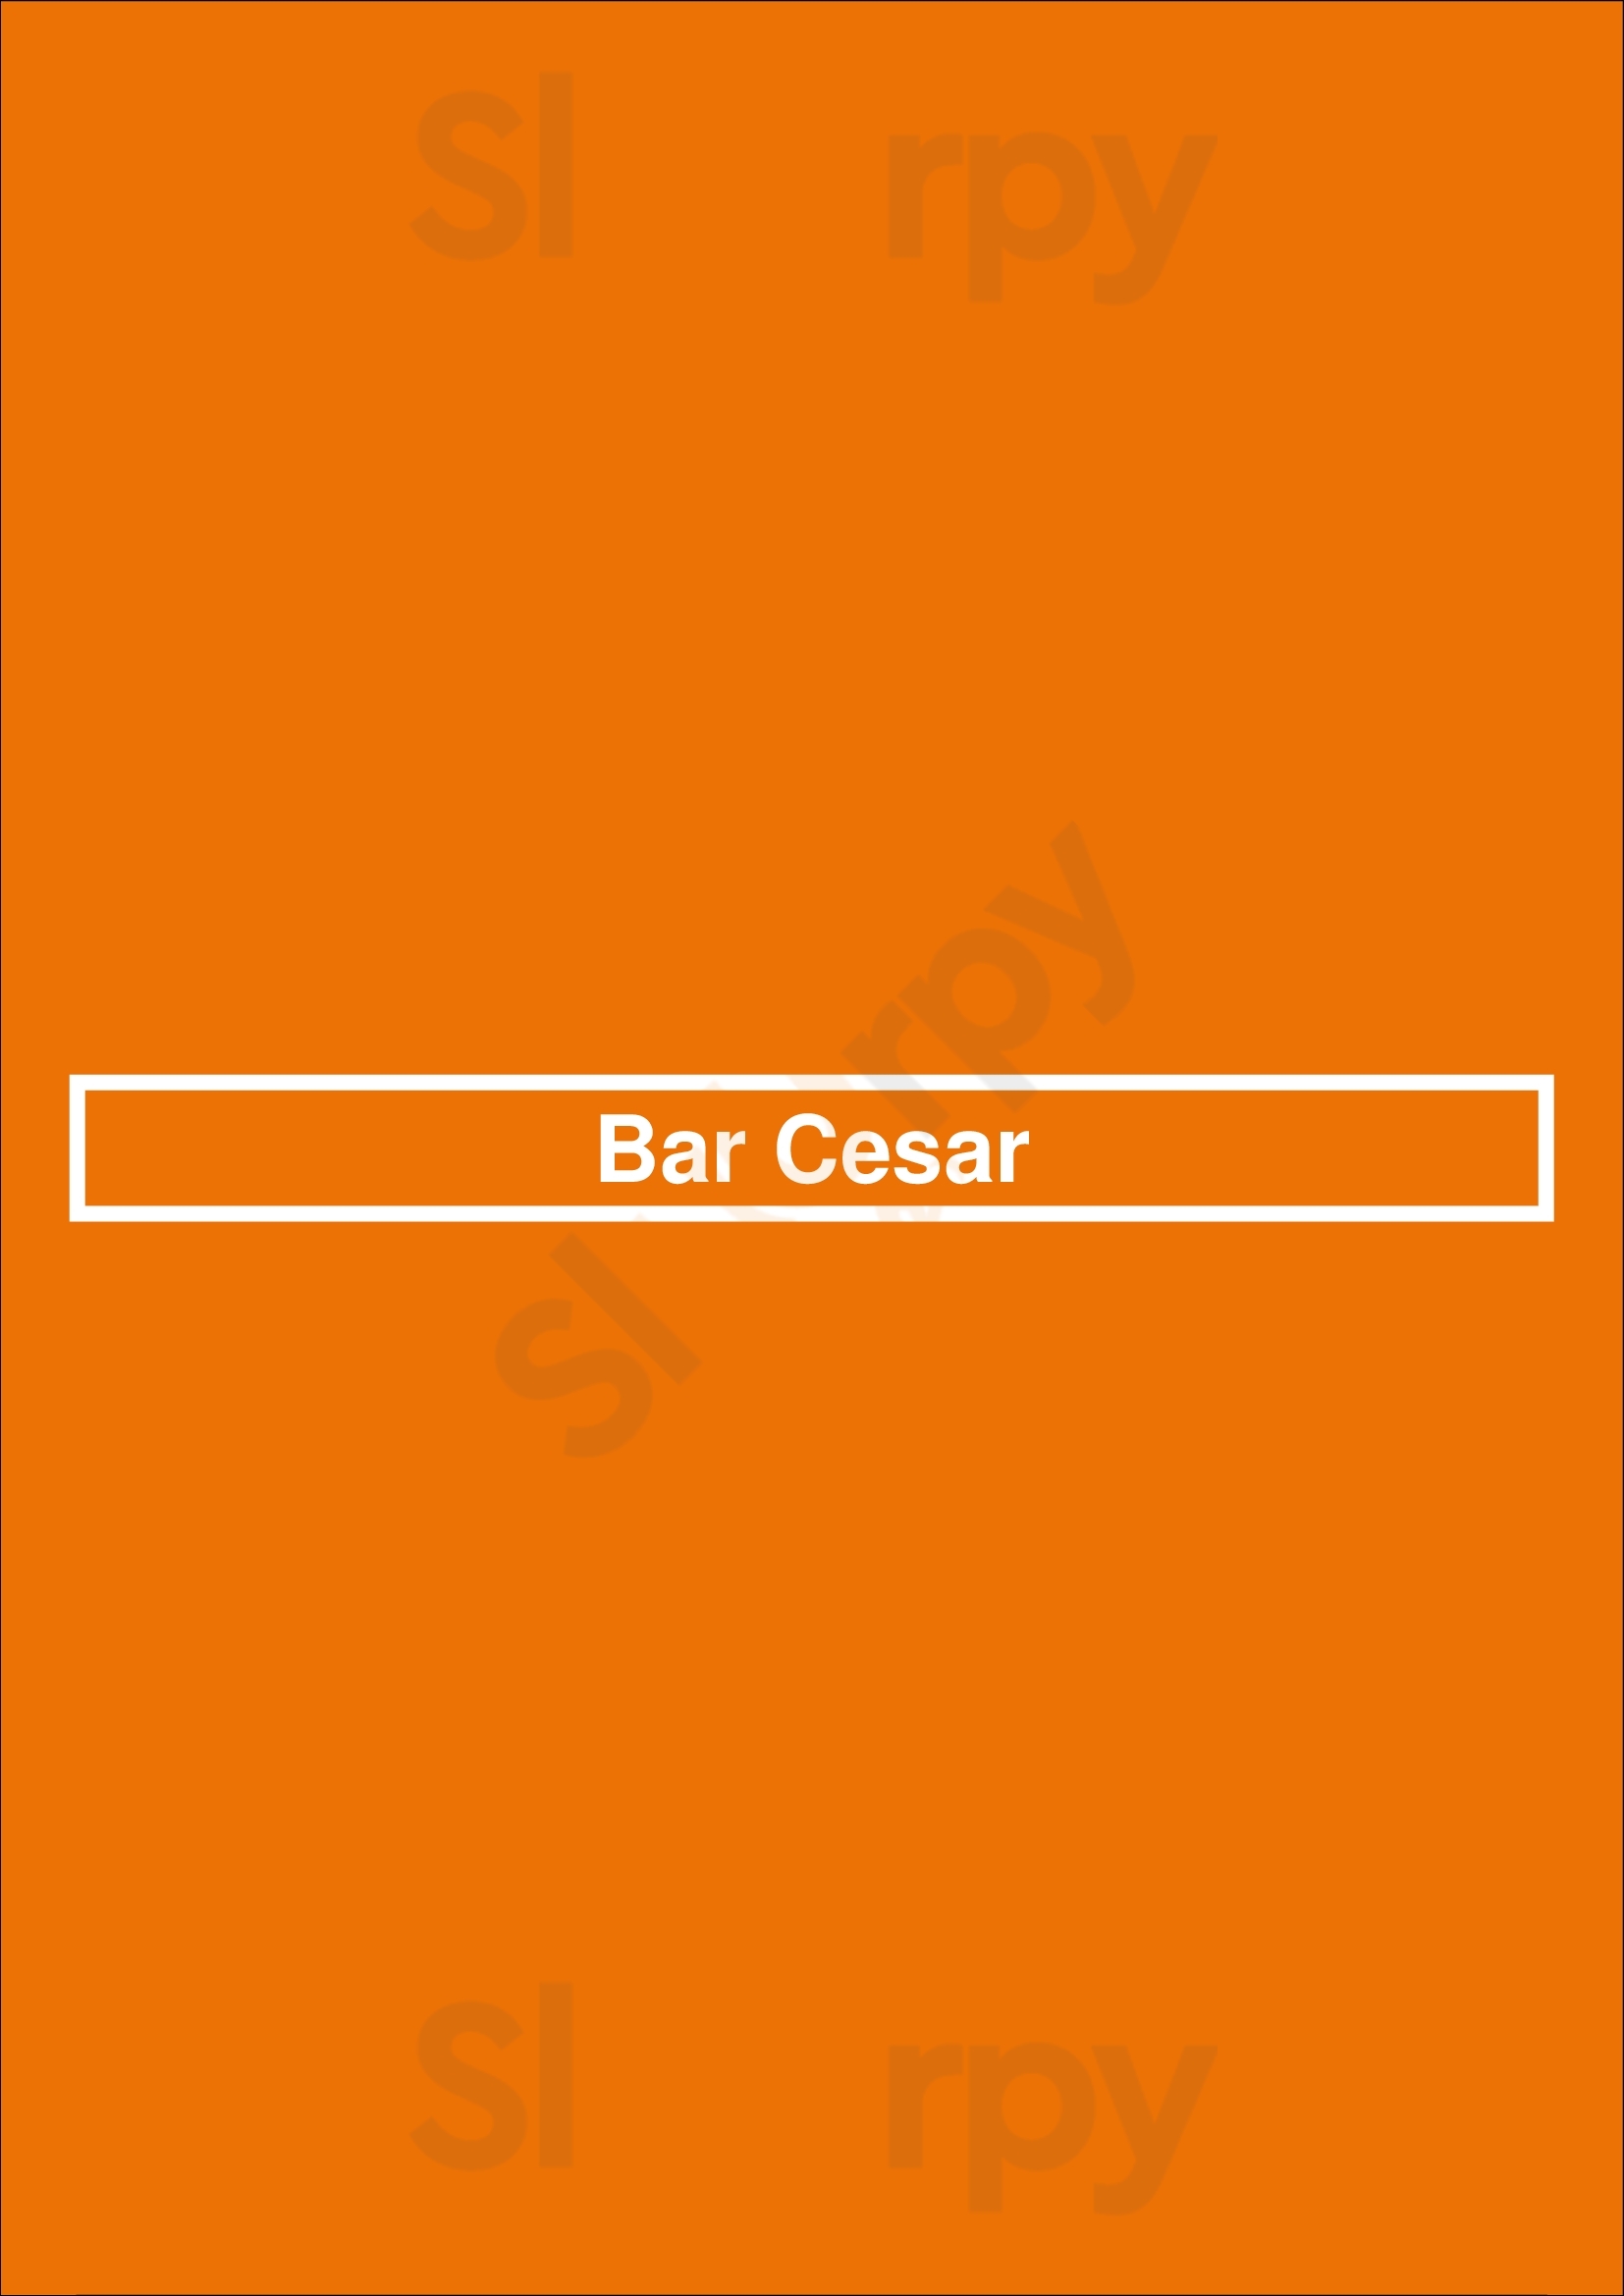 Bar Cesar Oakland Menu - 1